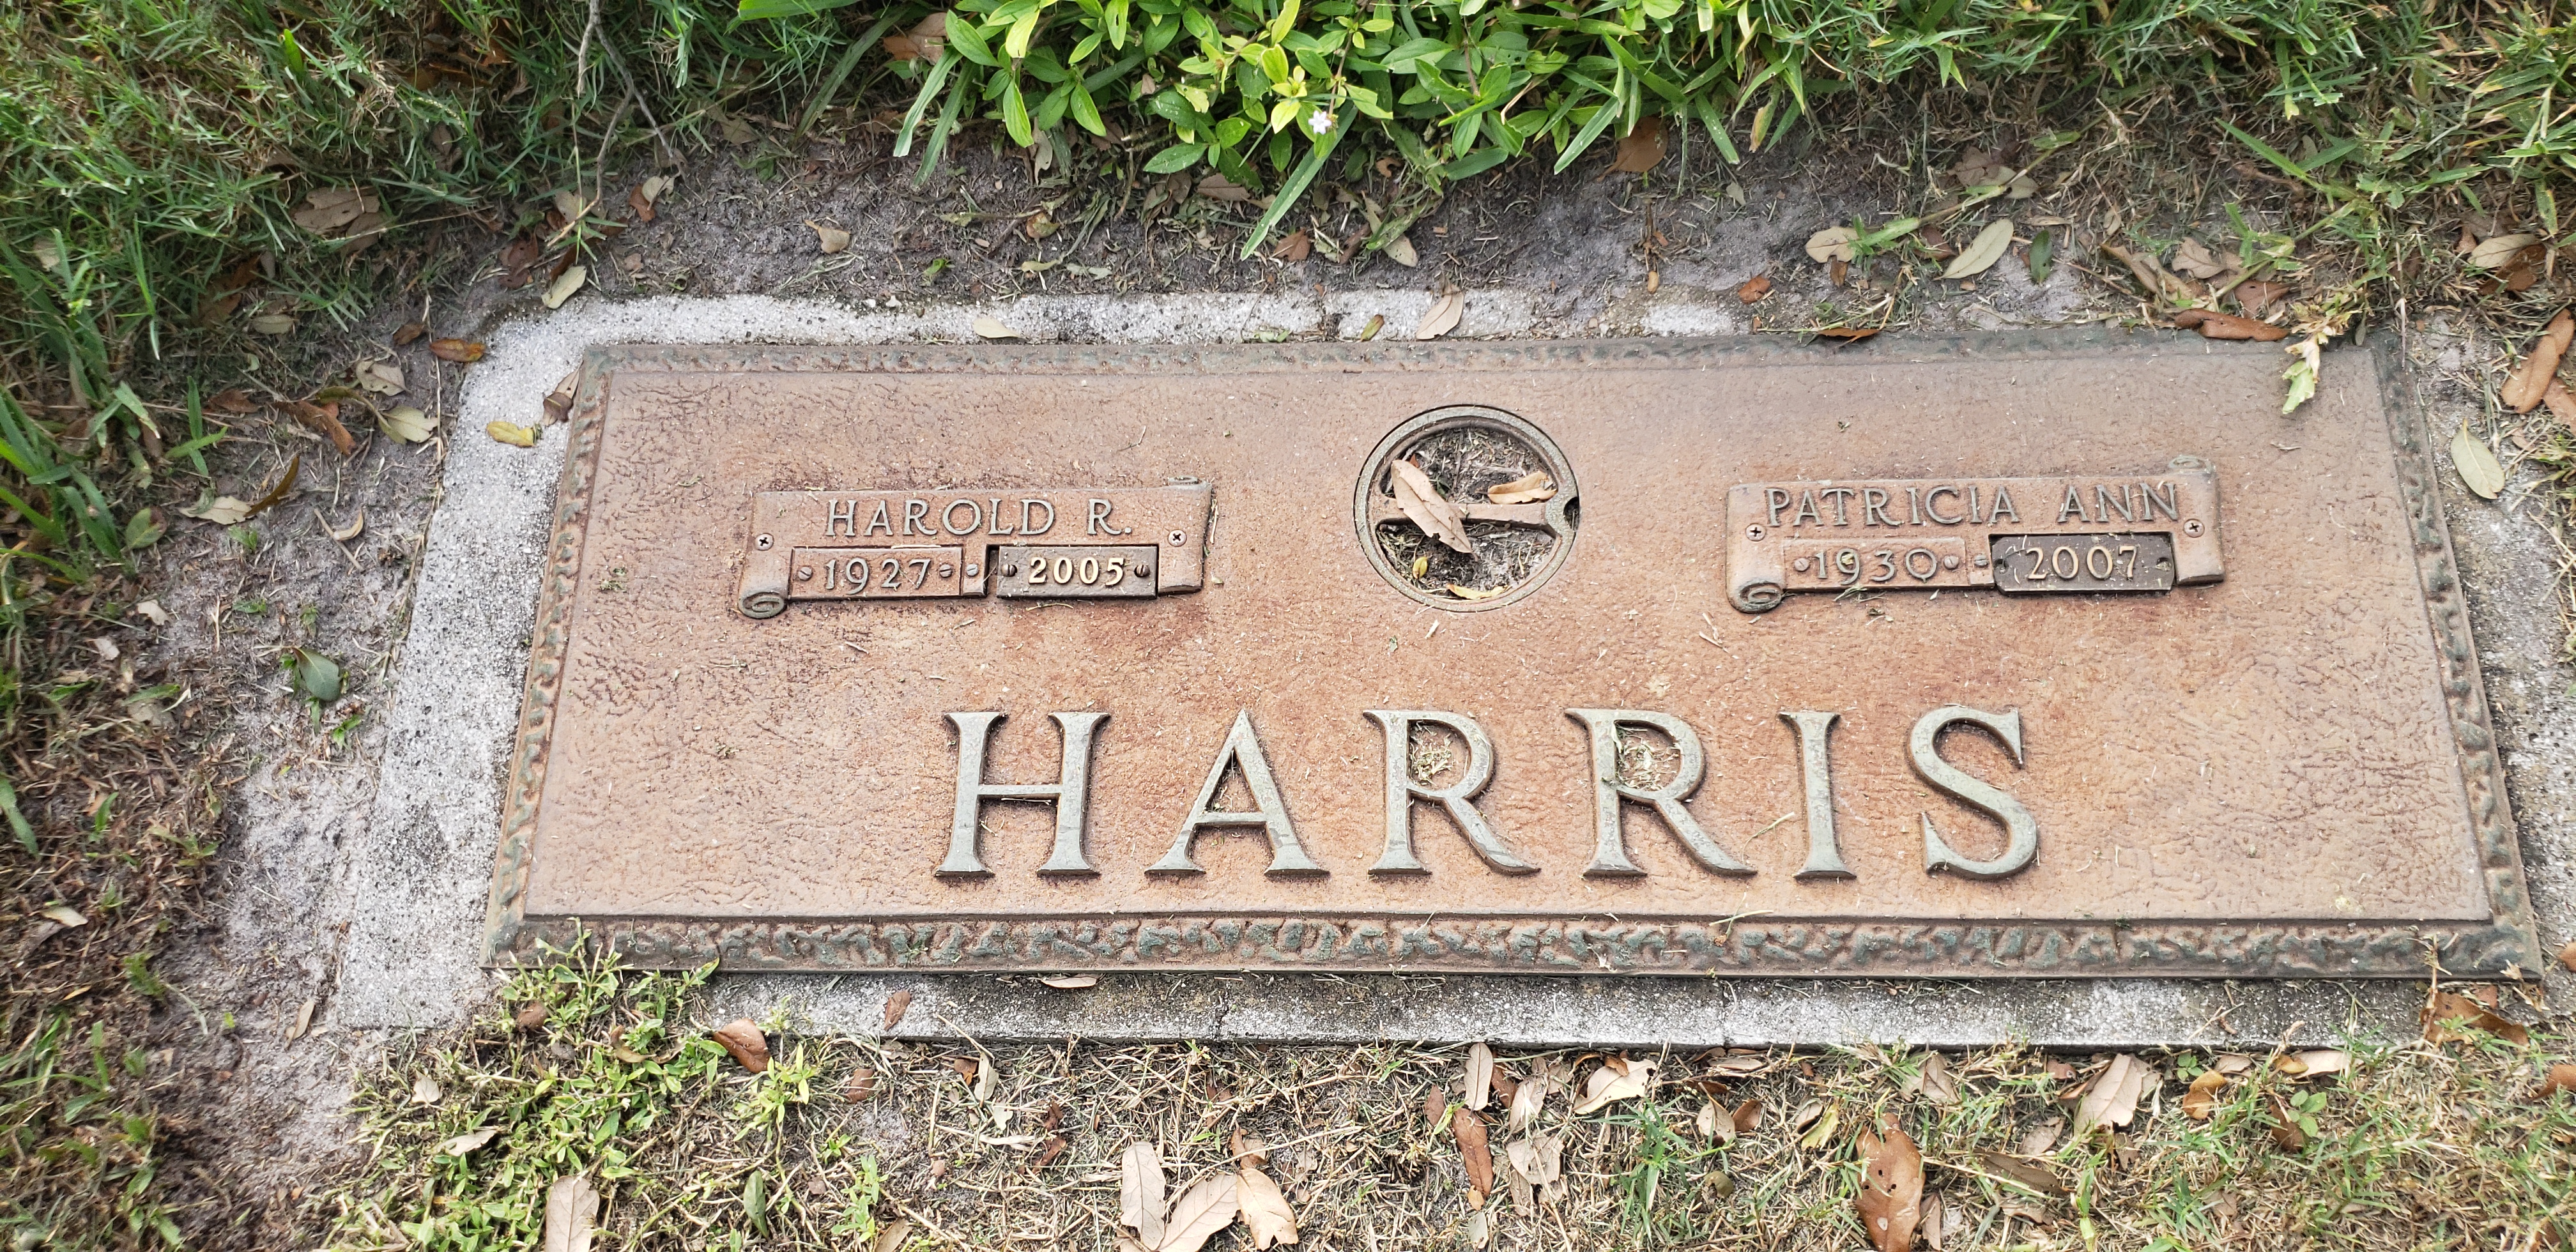 Harold R Harris